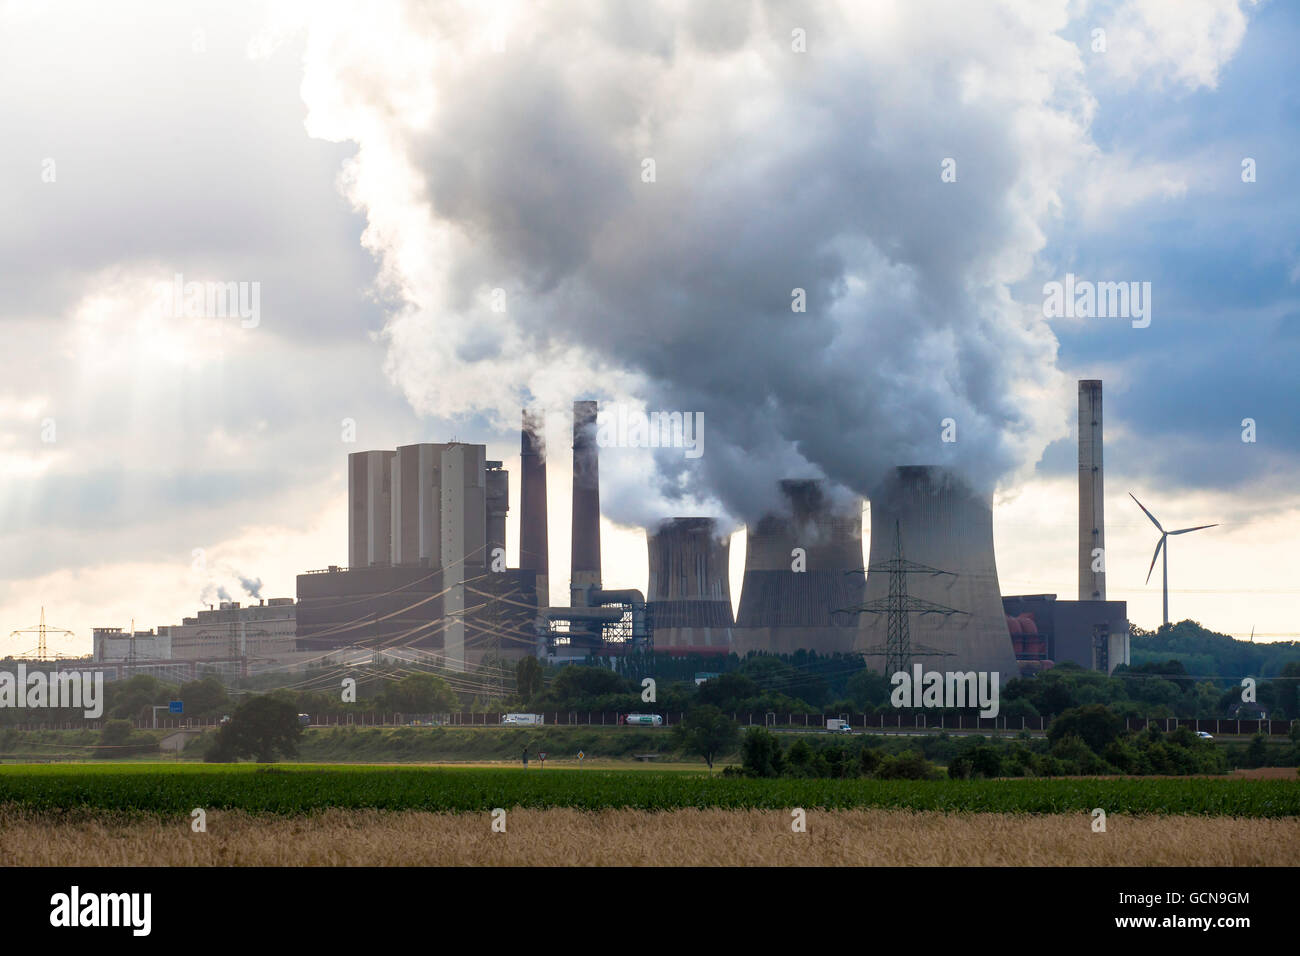 Europe, Germany, North Rhine-Westphalia, the lignite-fired power plant Weisweiler in Eschweiler-Weisweiler. Stock Photo